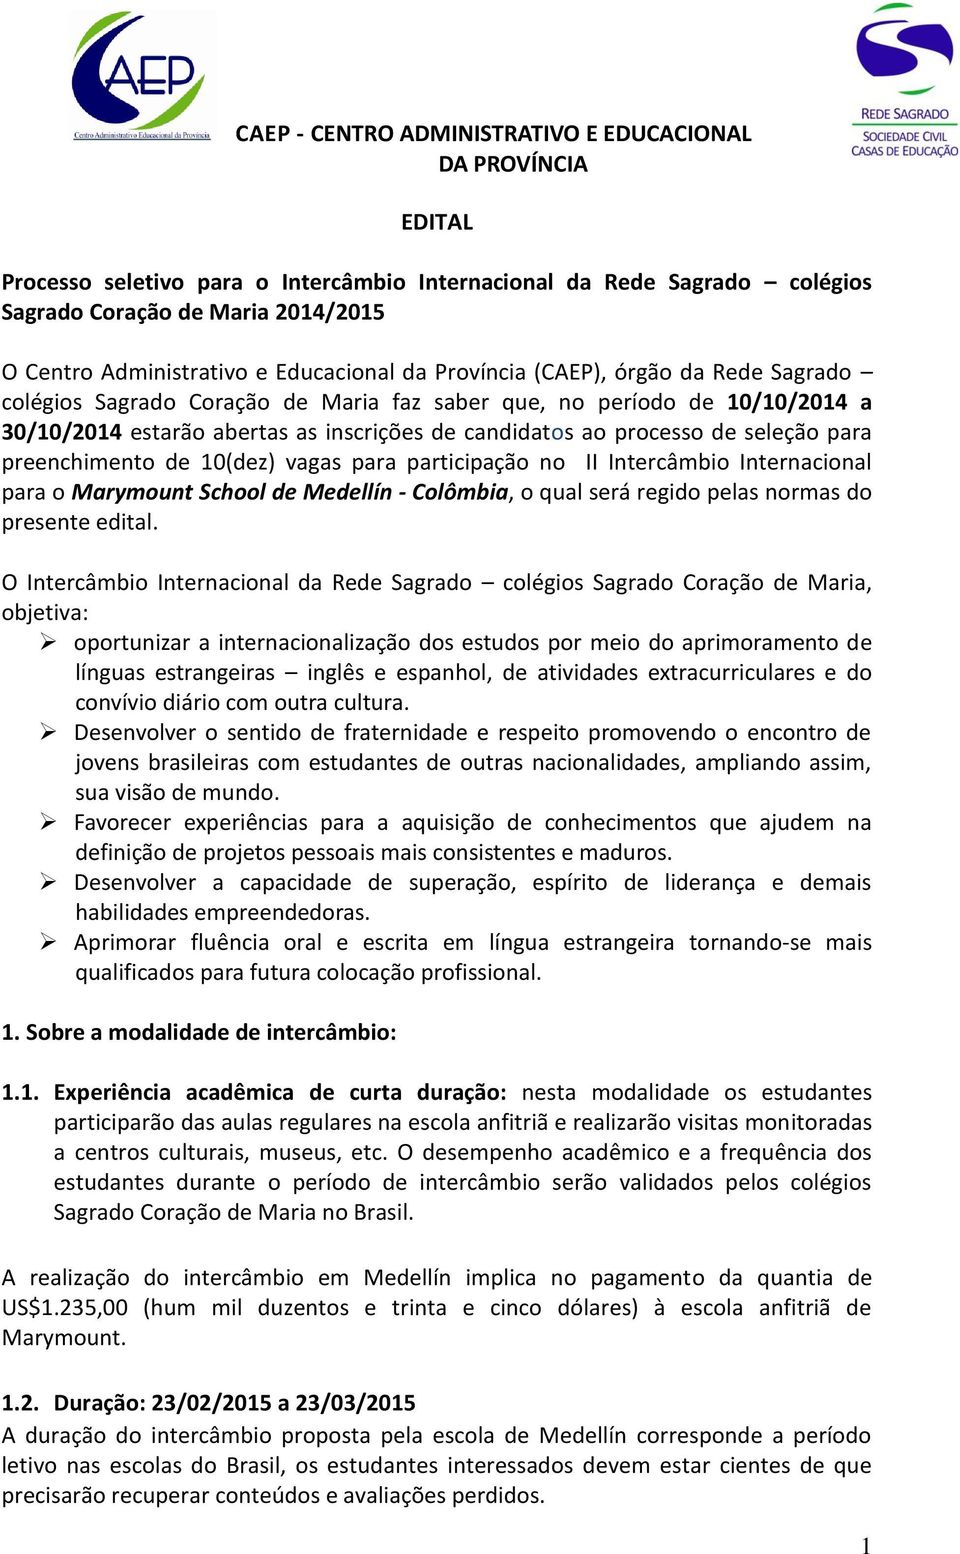 participação no II Intercâmbio Internacional para o Marymount School de Medellín - Colômbia, o qual será regido pelas normas do presente edital.